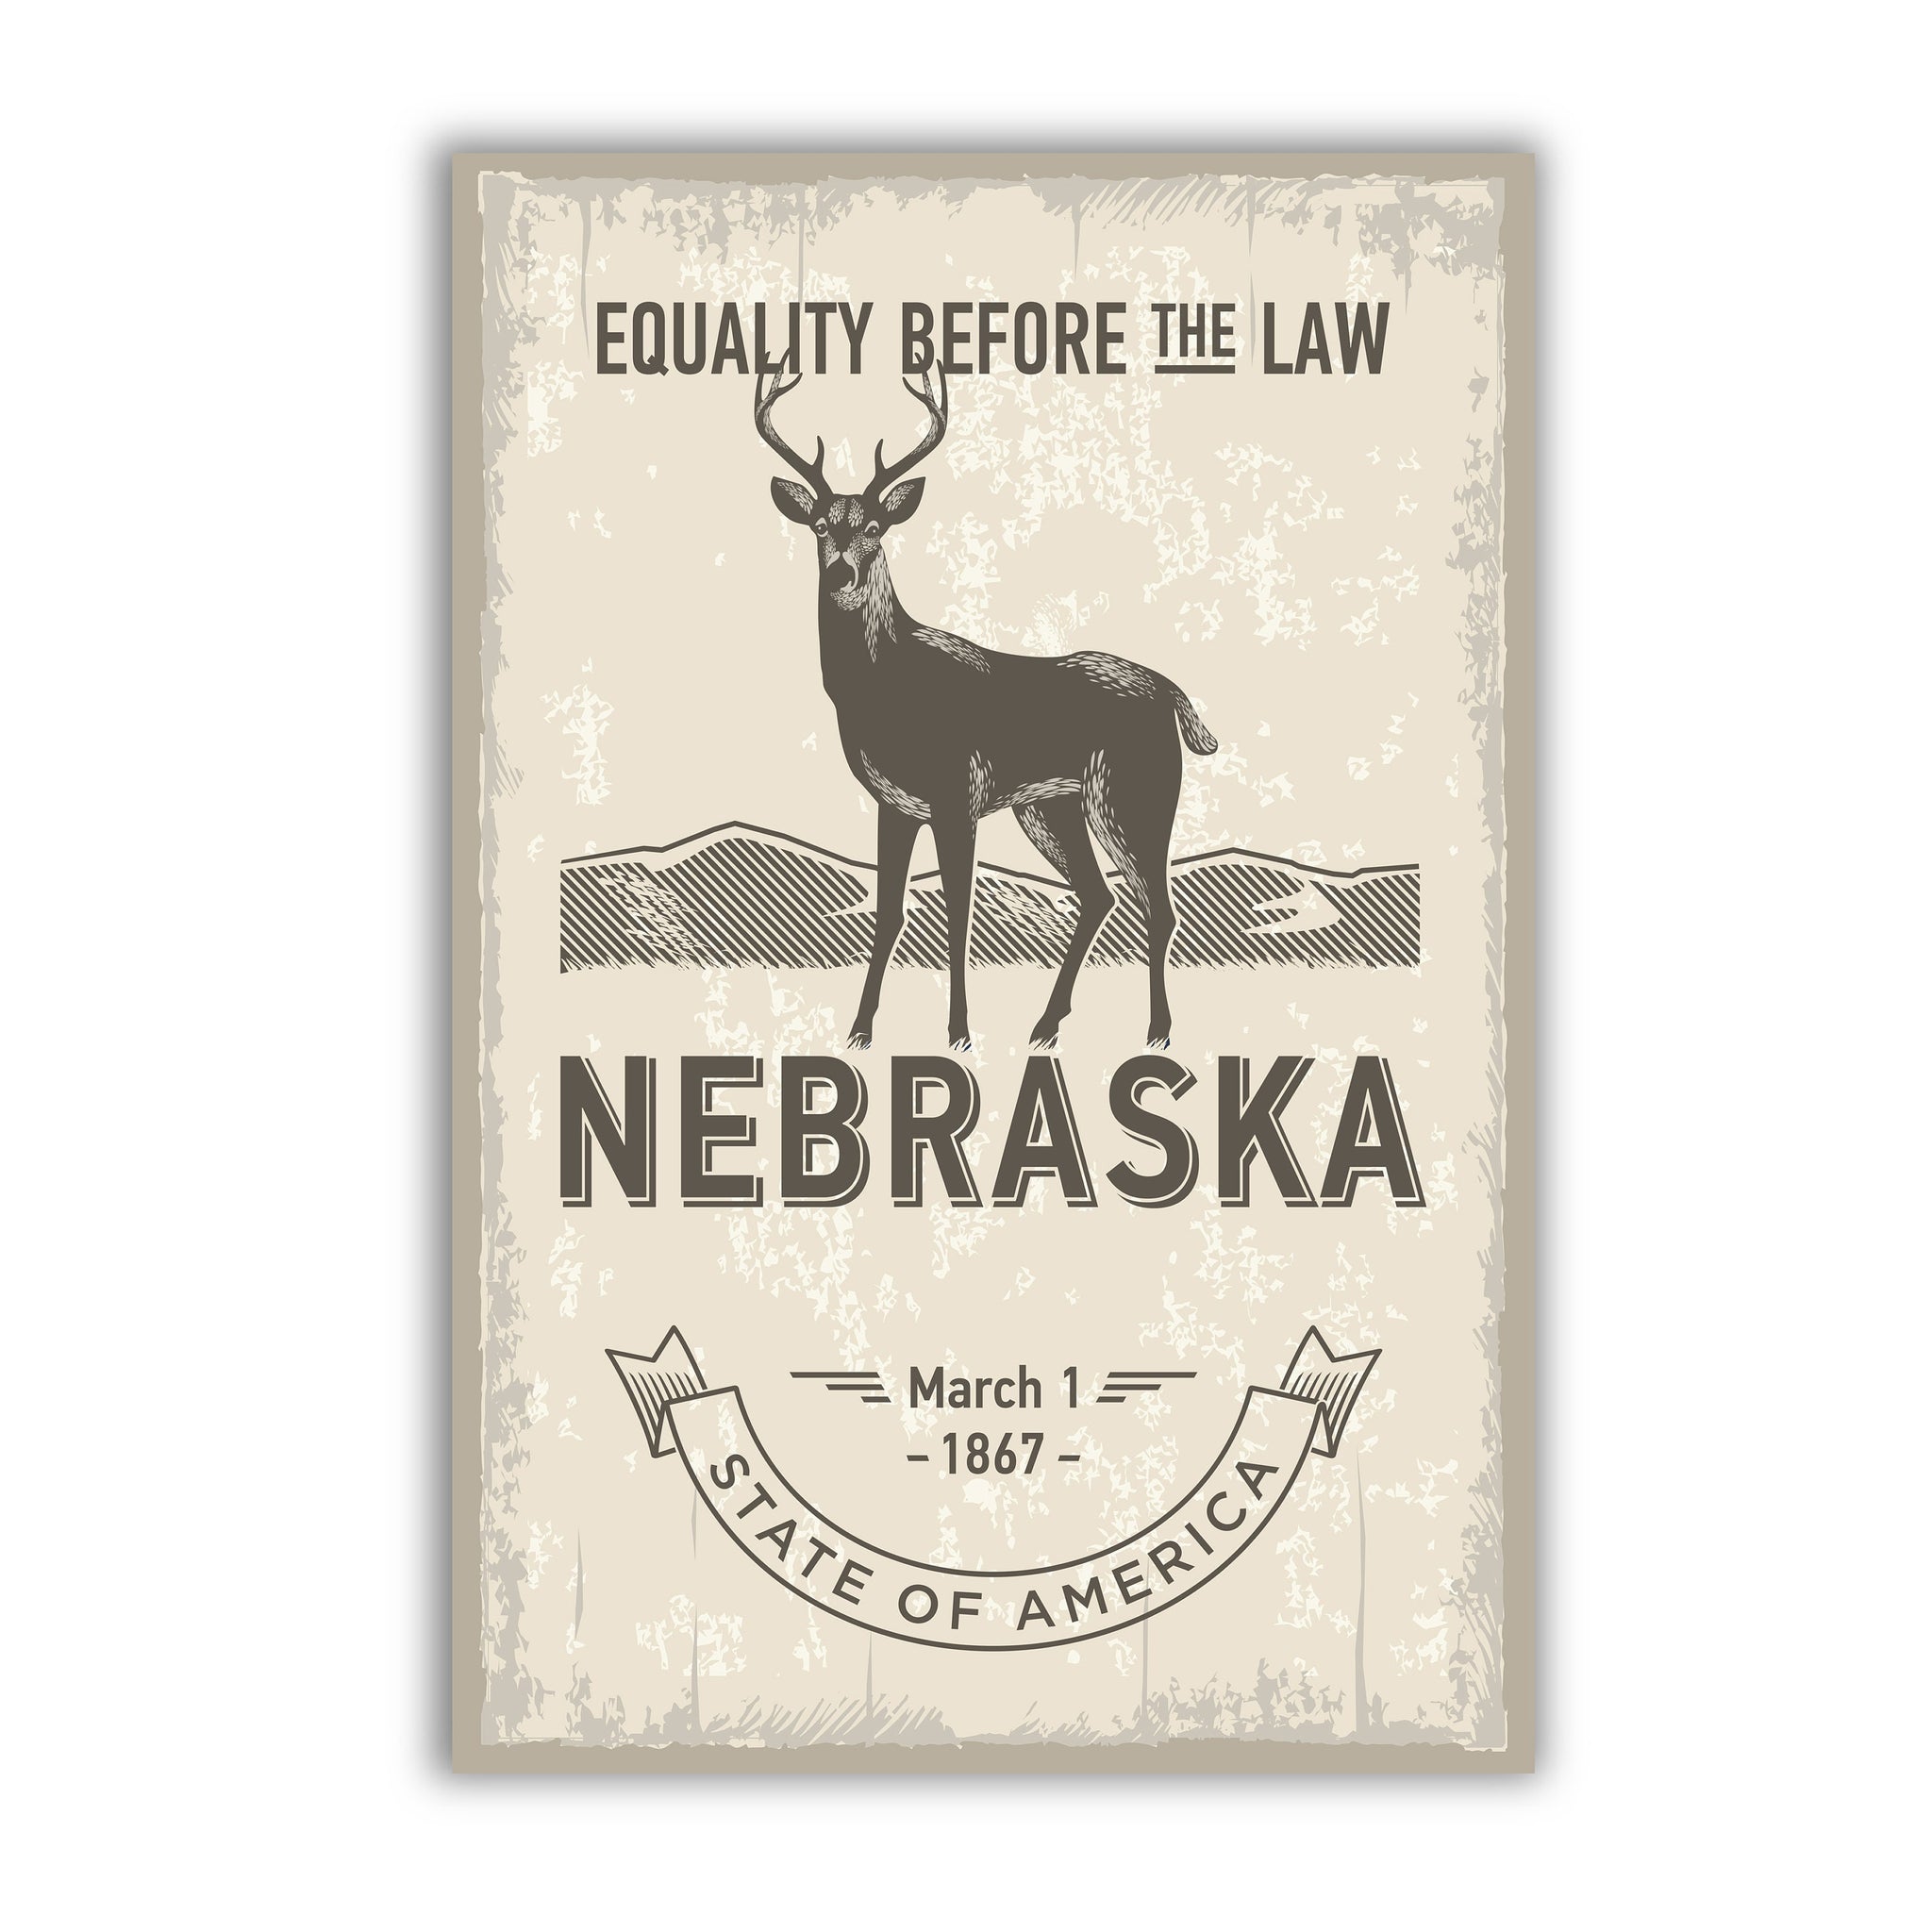 Nebraska State Symbol Poster, Nebraska State Poster Print, Nebraska State Emblem Poster, Retro Travel State Poster, Home and Office Wall Art